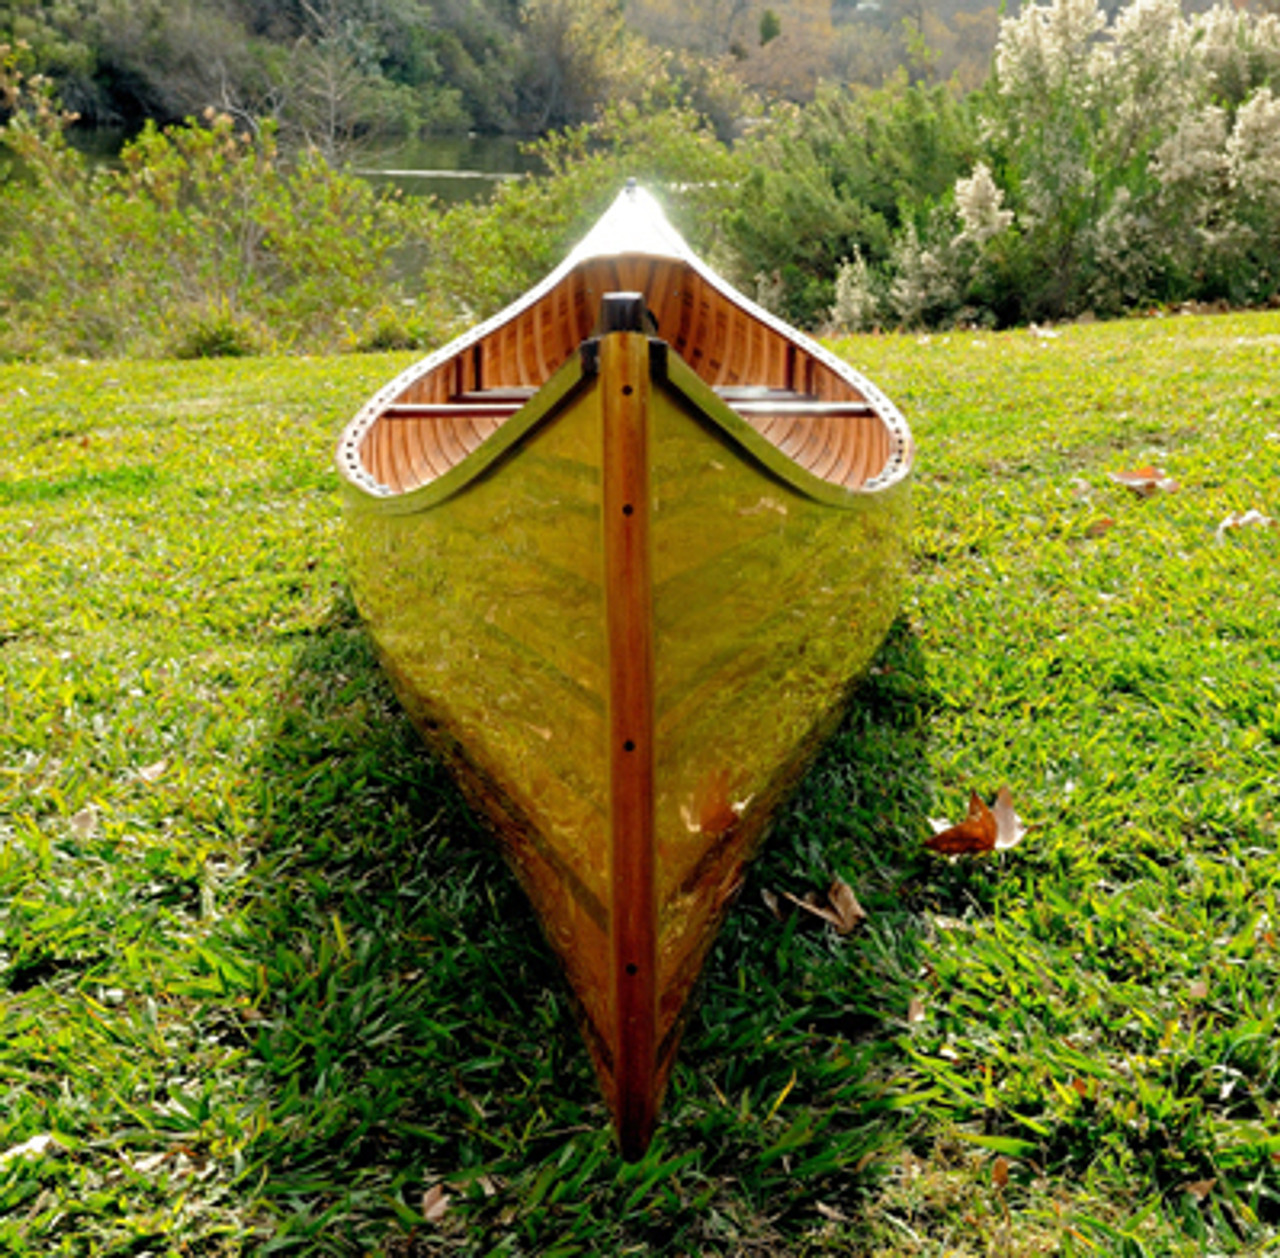 Cedar Wood Strip Built Canoe Wooden Ribs